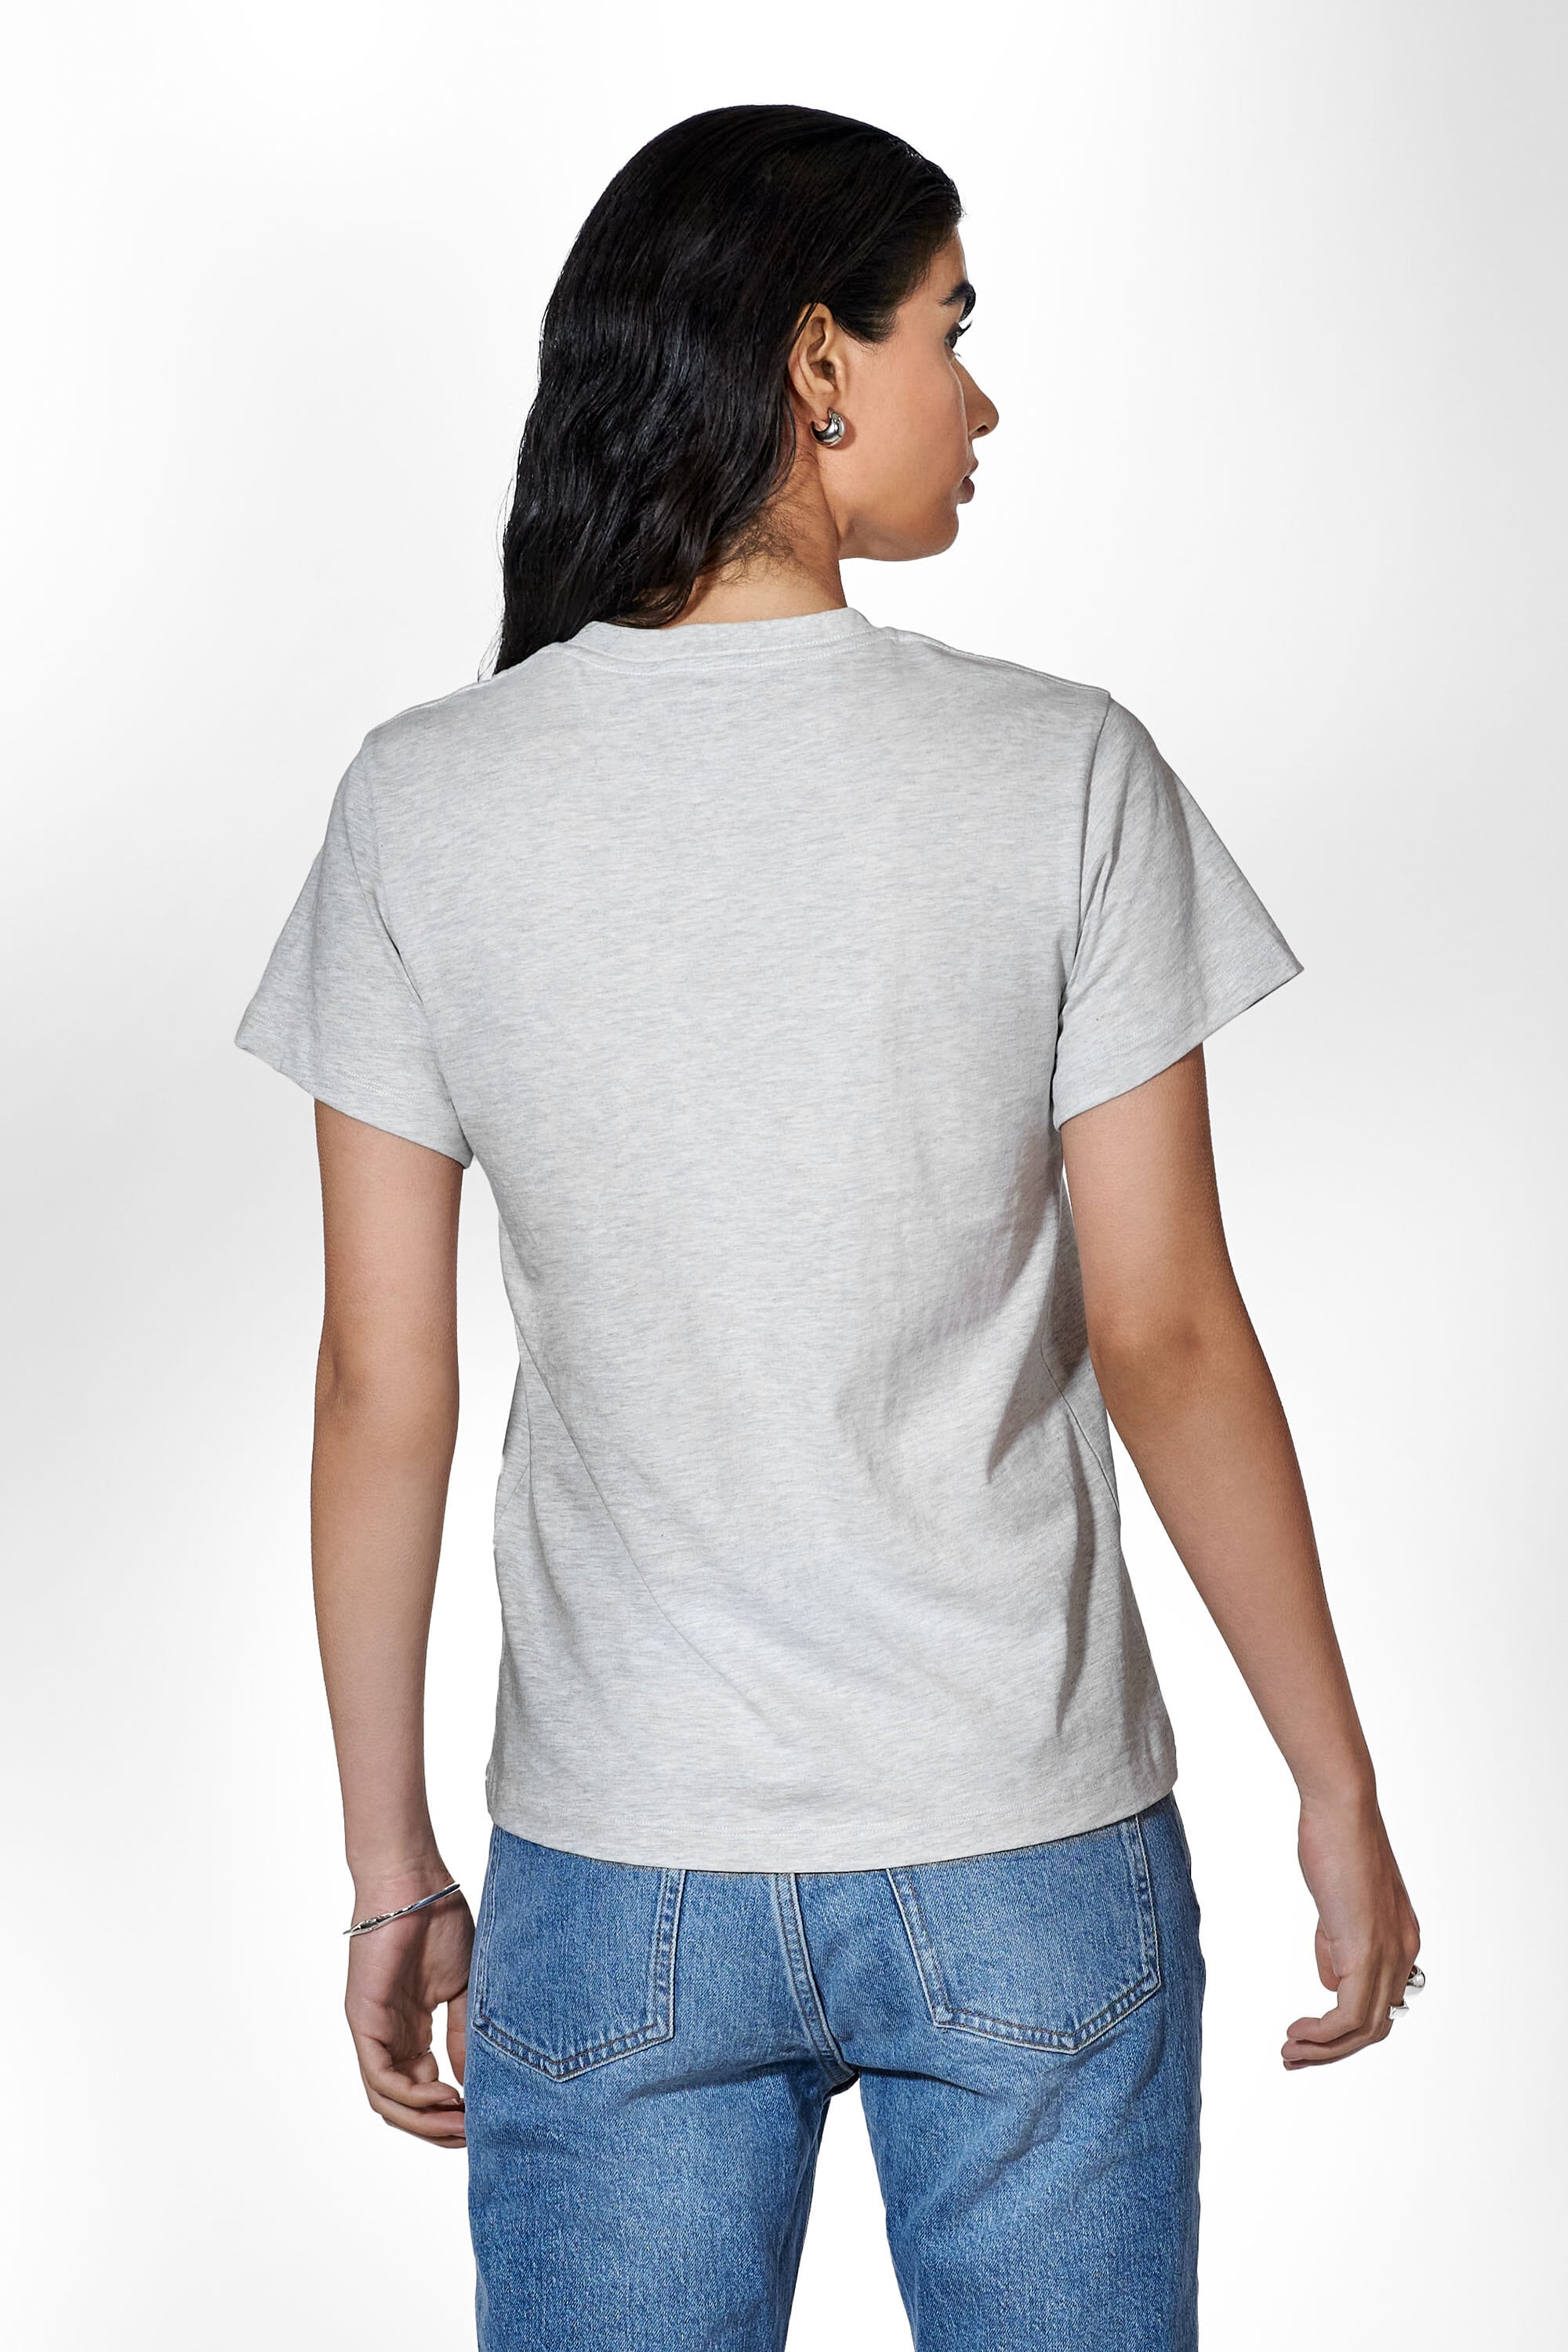 Cotton Jockey Light Grey Melange T-Shirt Bra at Rs 729/piece in